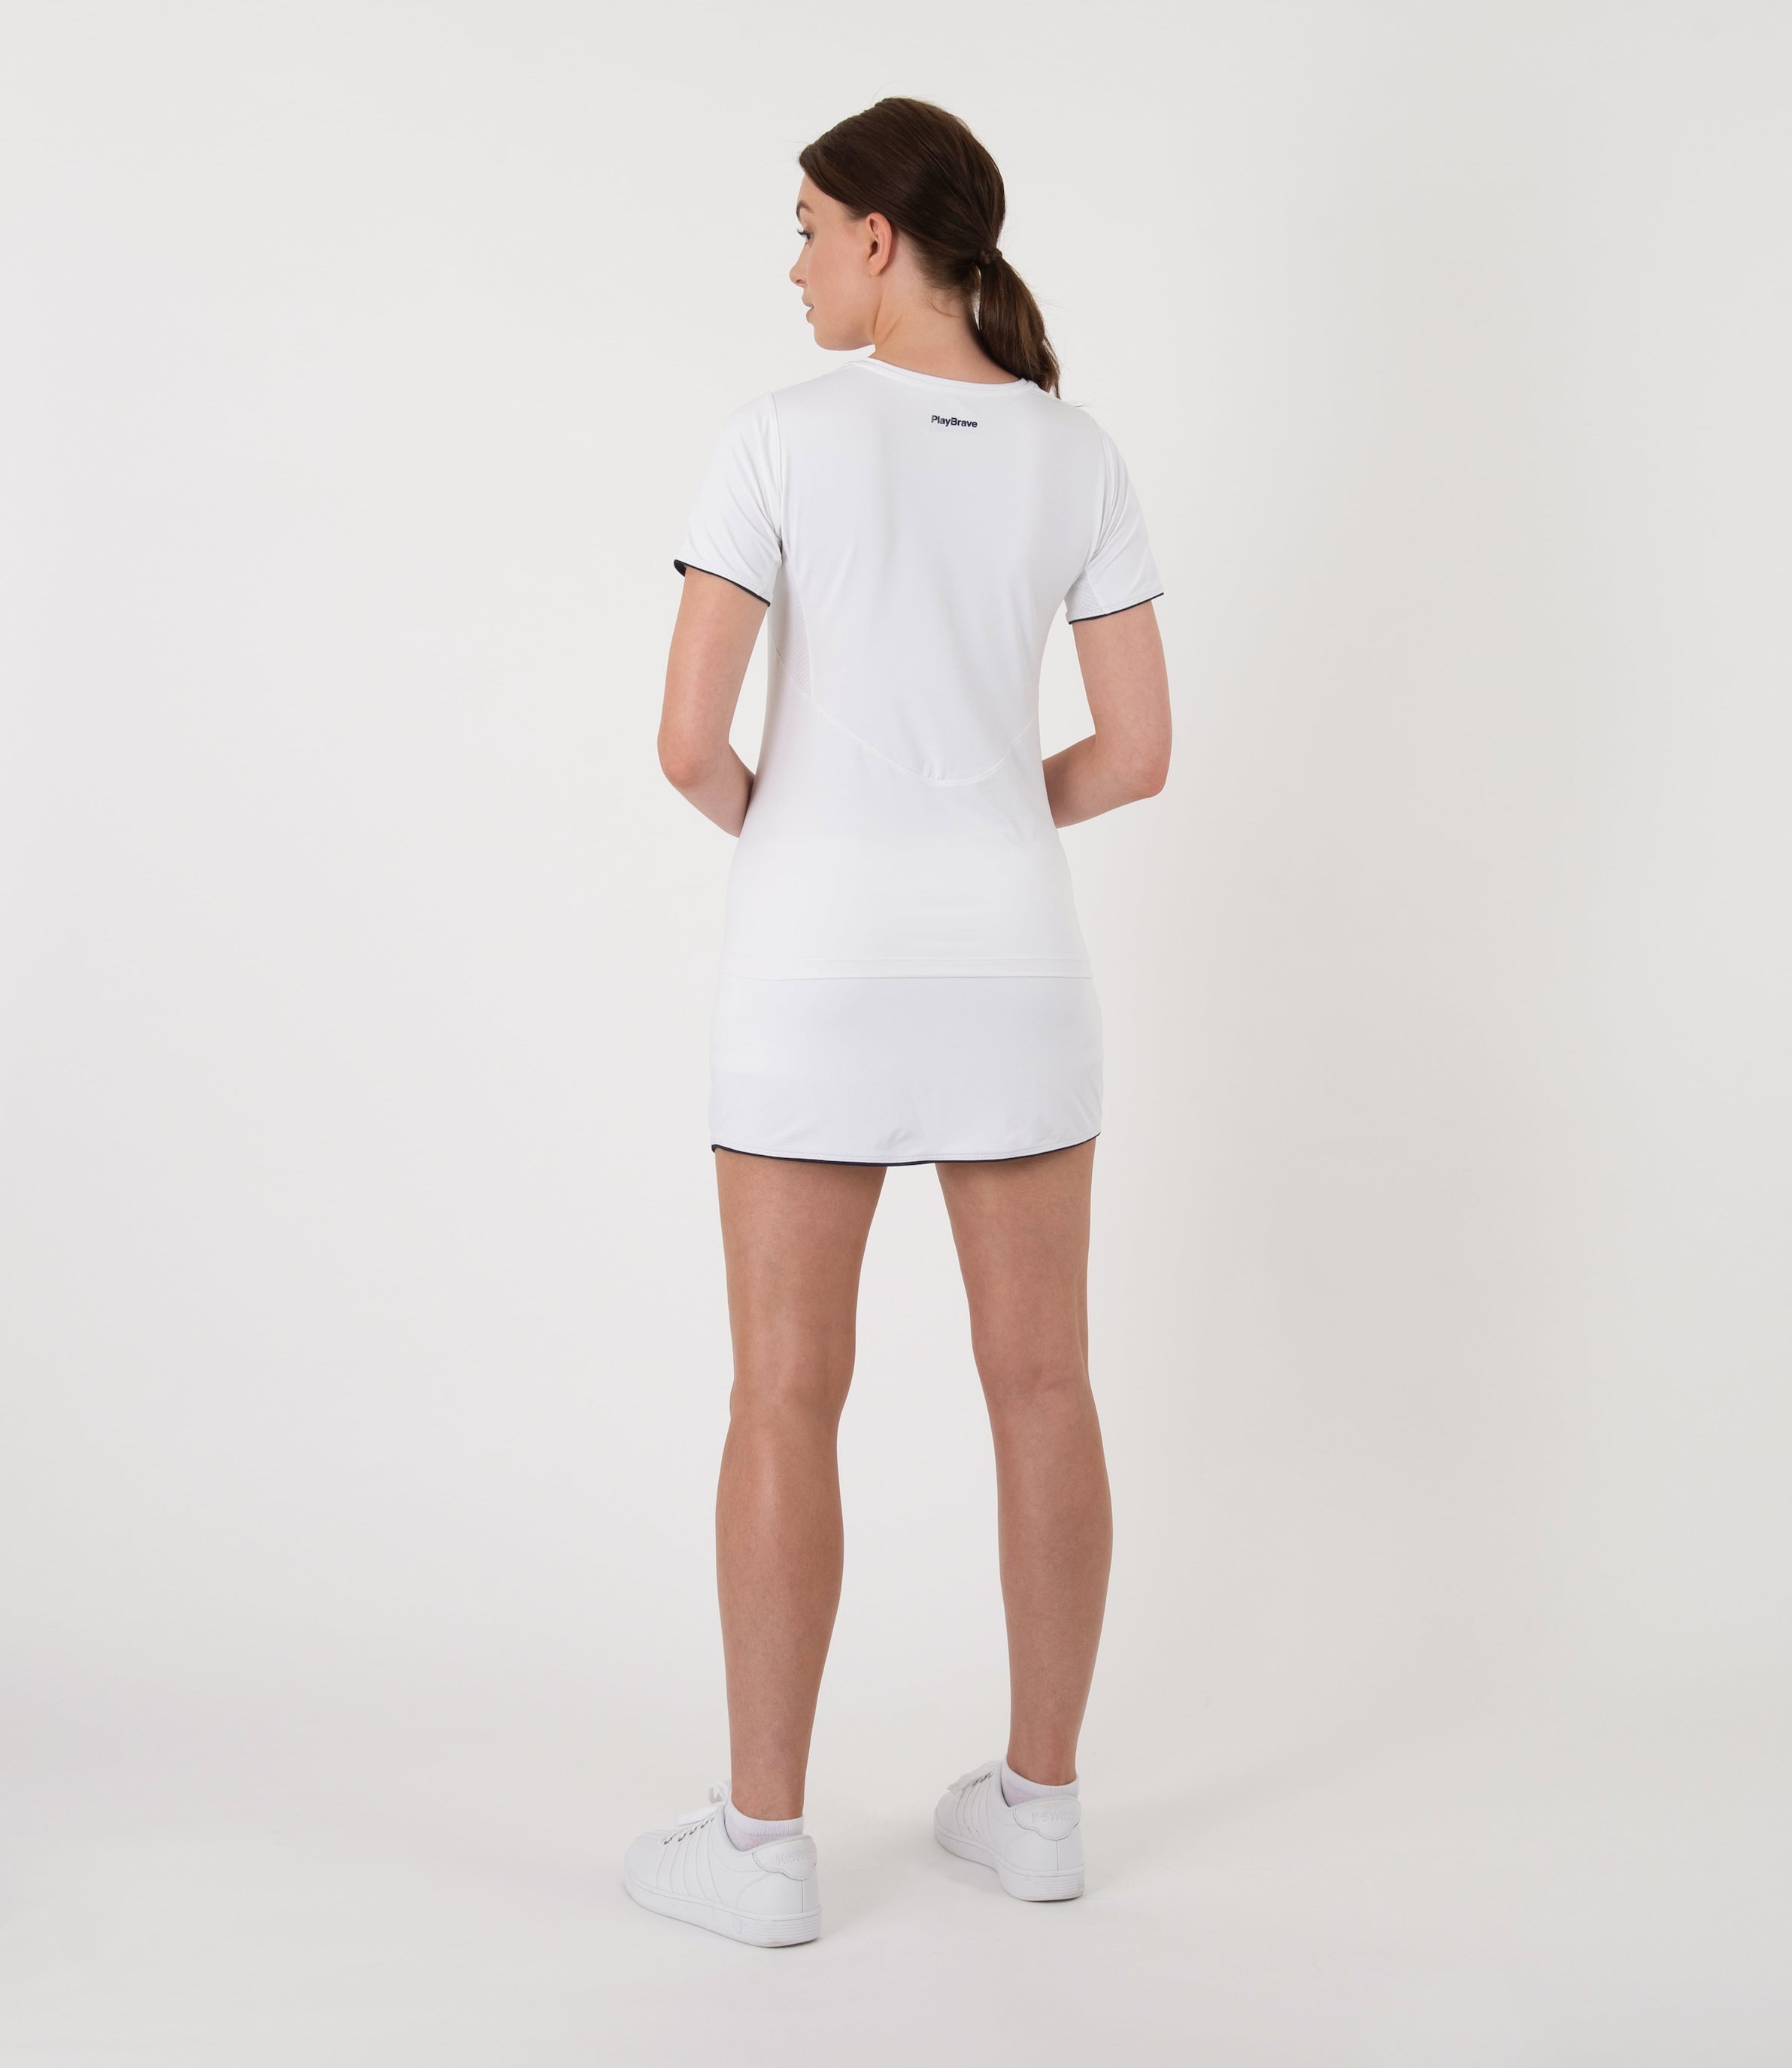 Eugenie Classic White Tennis Skort | PlayBrave Sports